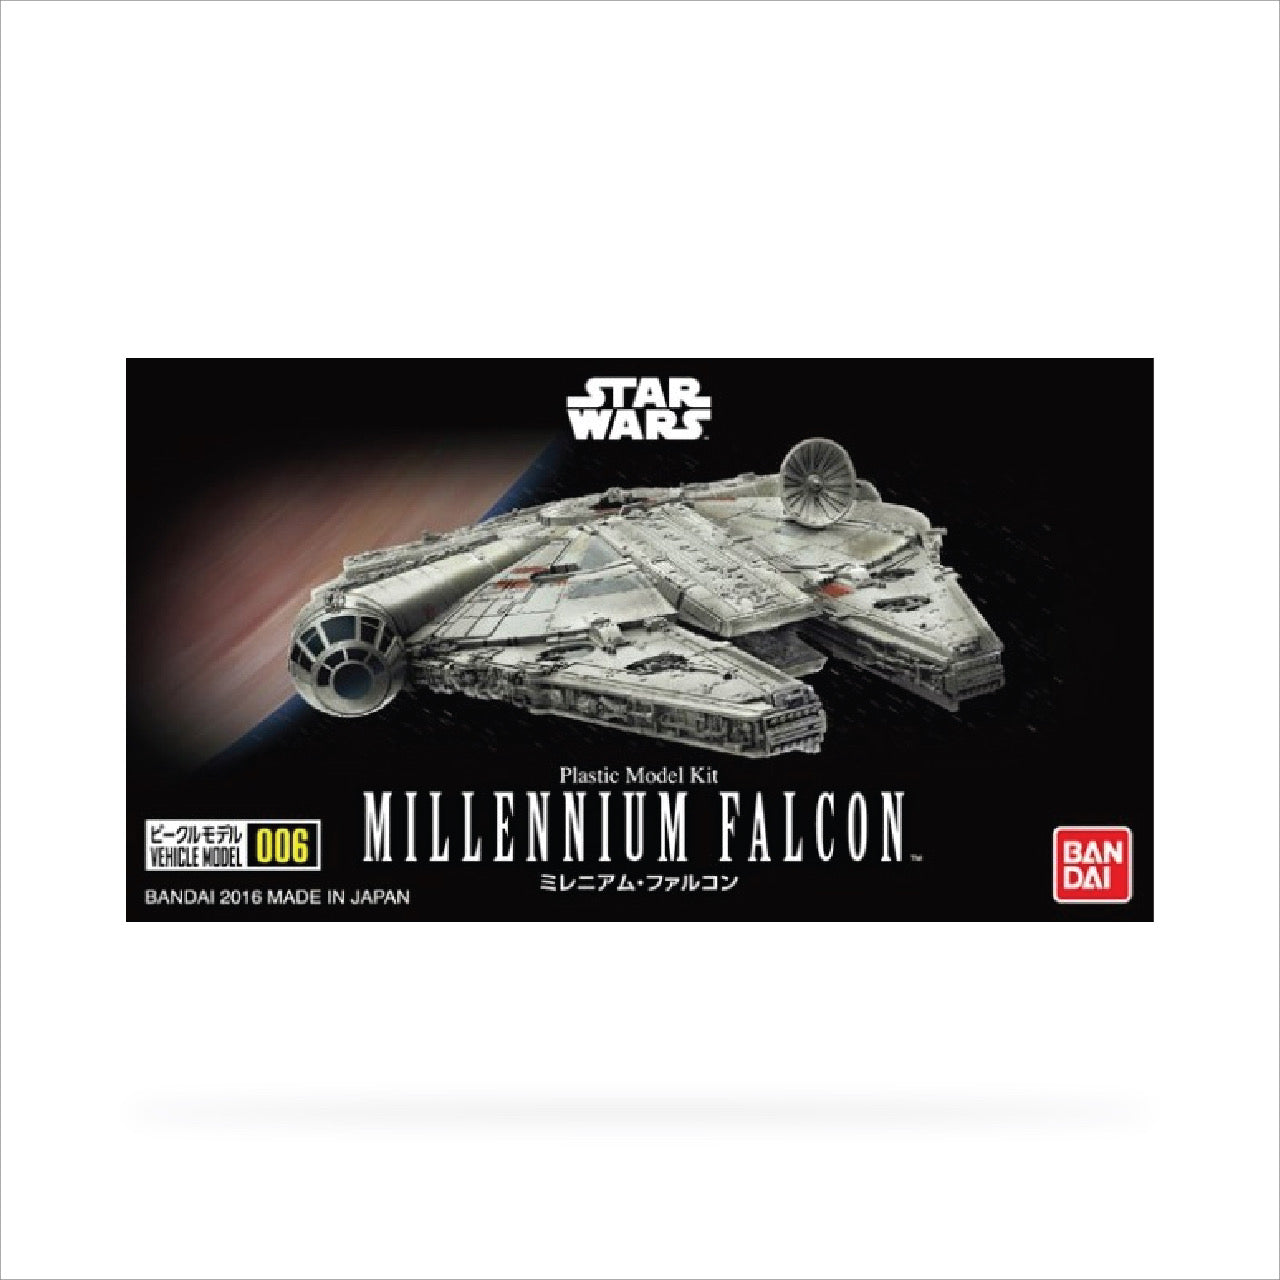 006 Millennium Falcon